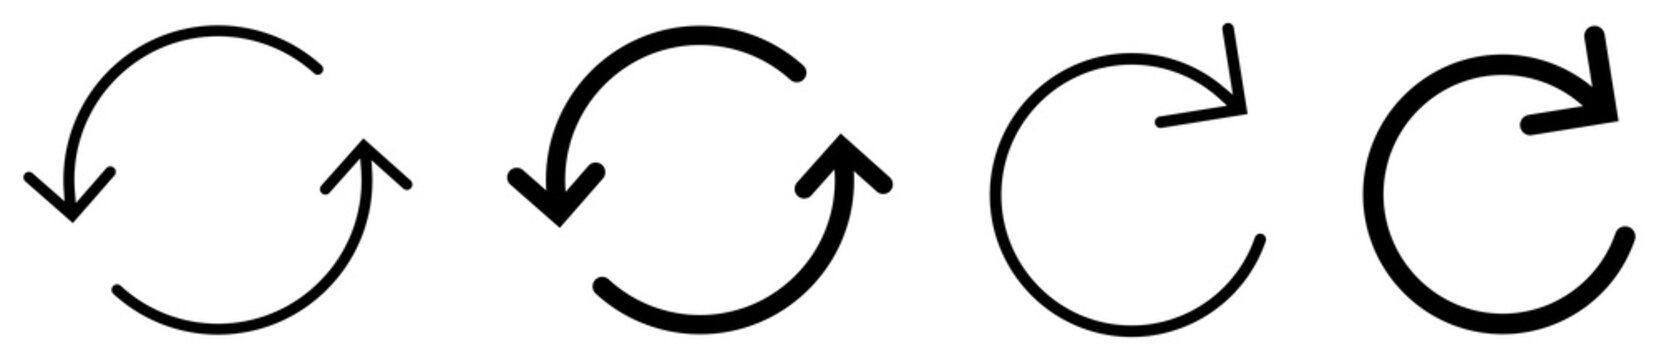 Arrow rotation circle. Vector illustration